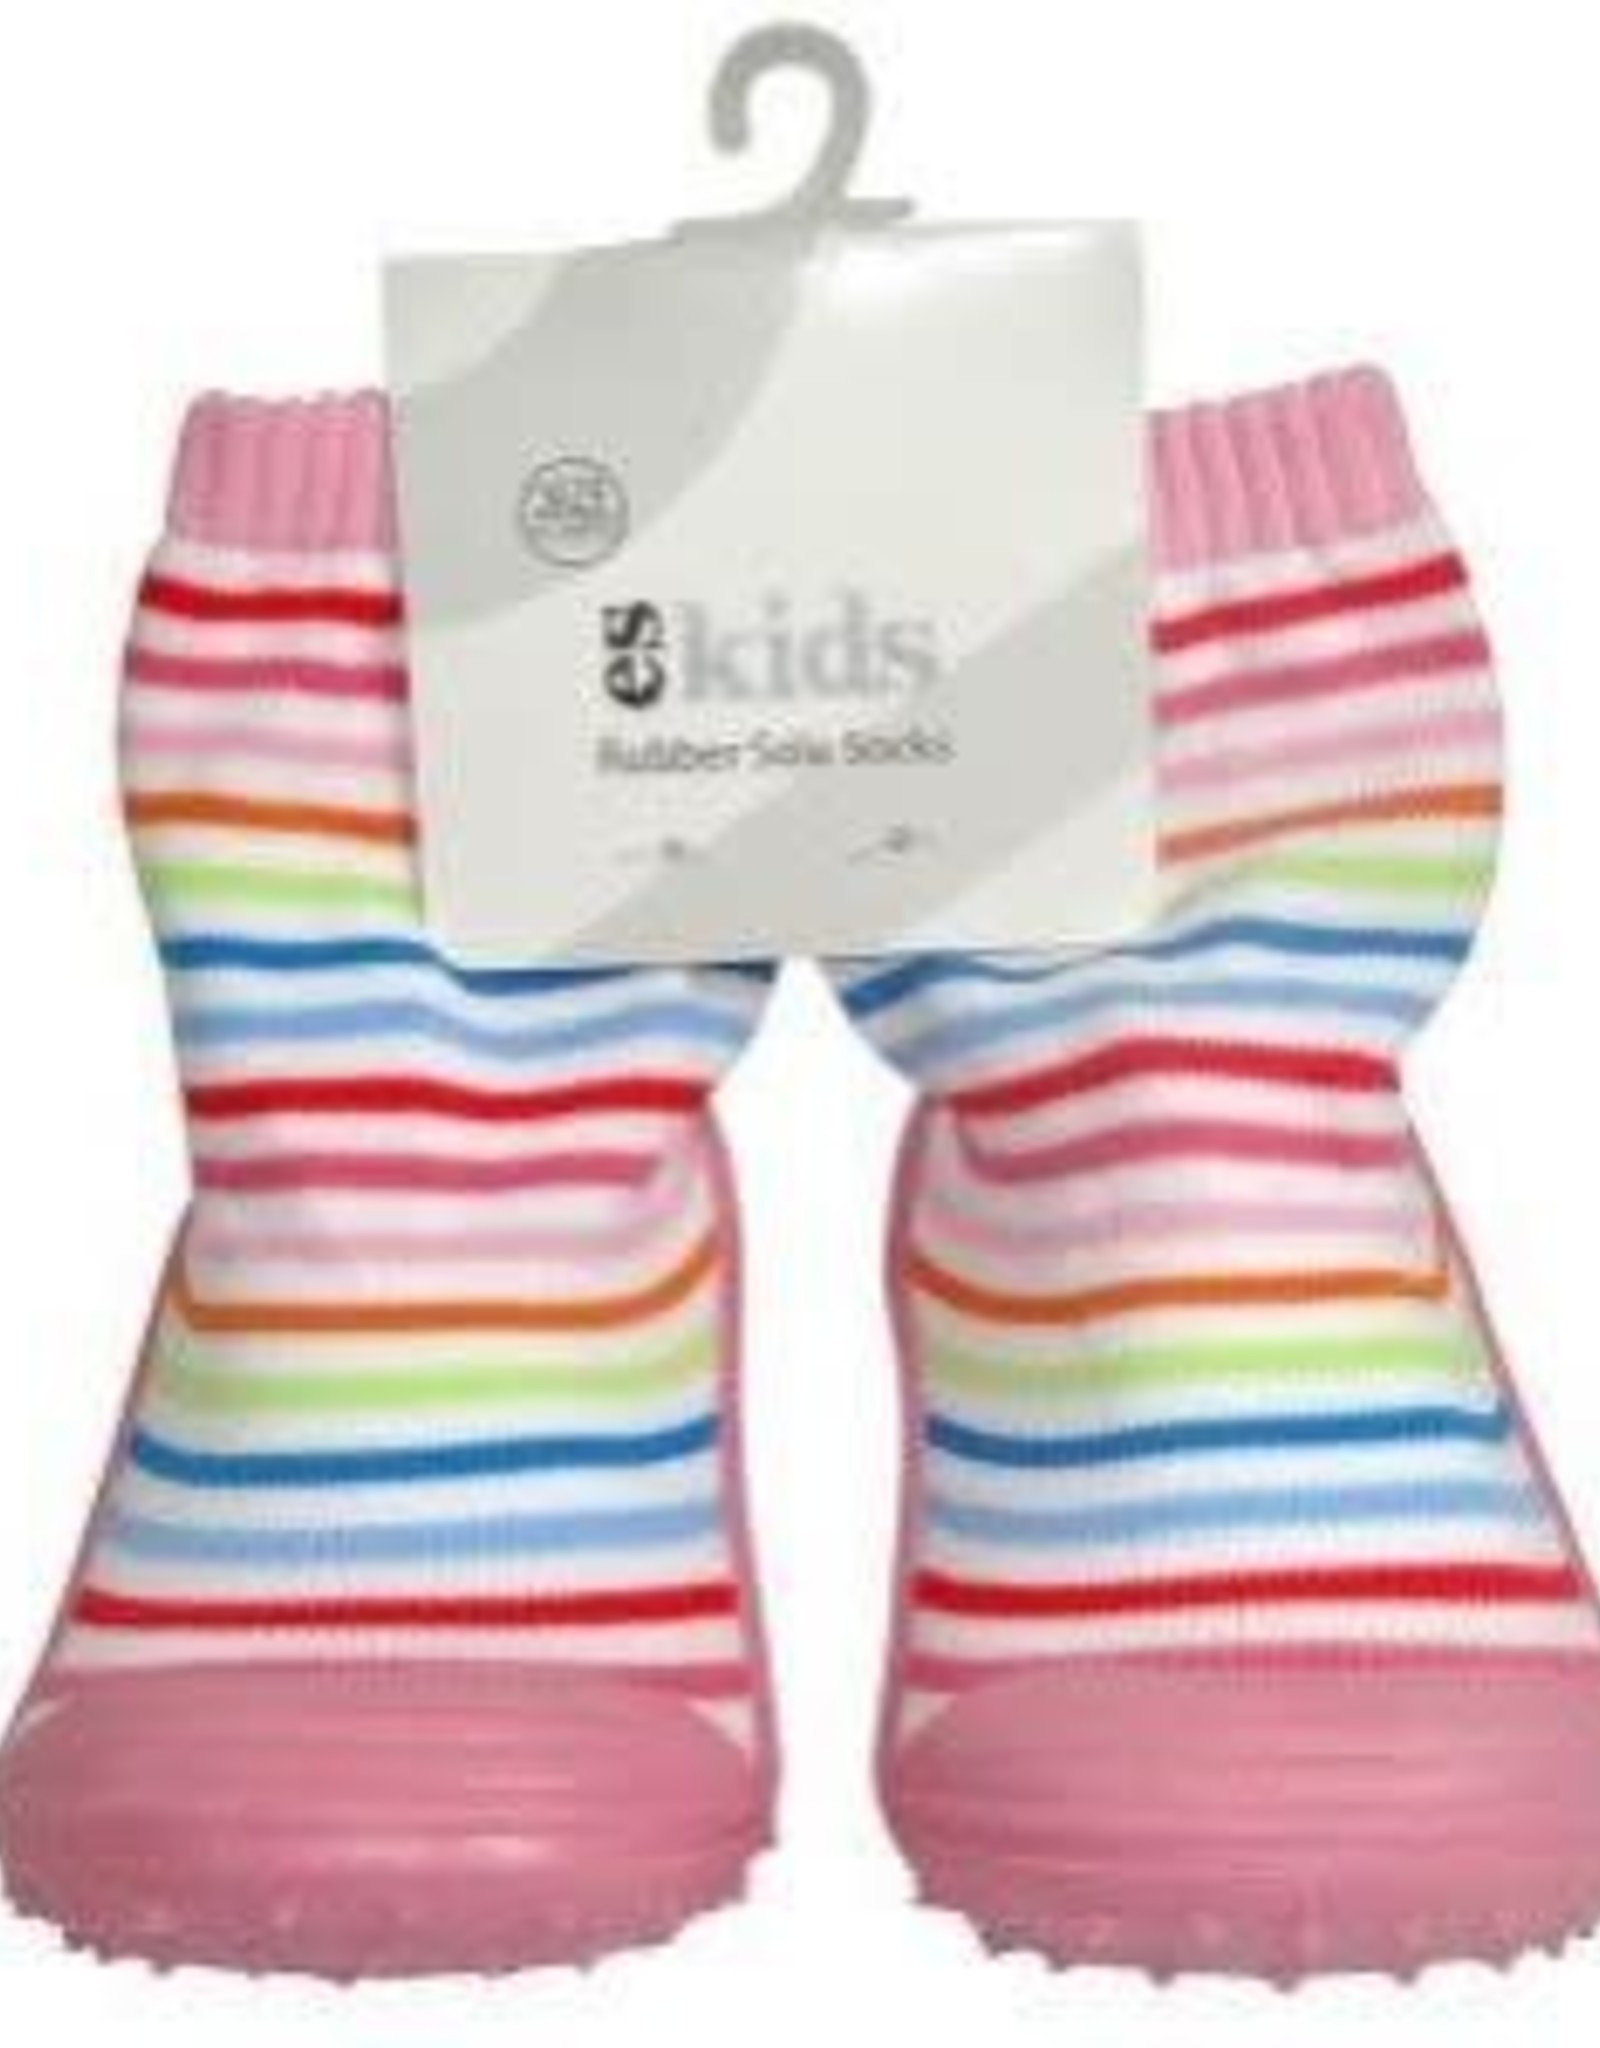 Rubber Soled Socks - Pink Rainbow